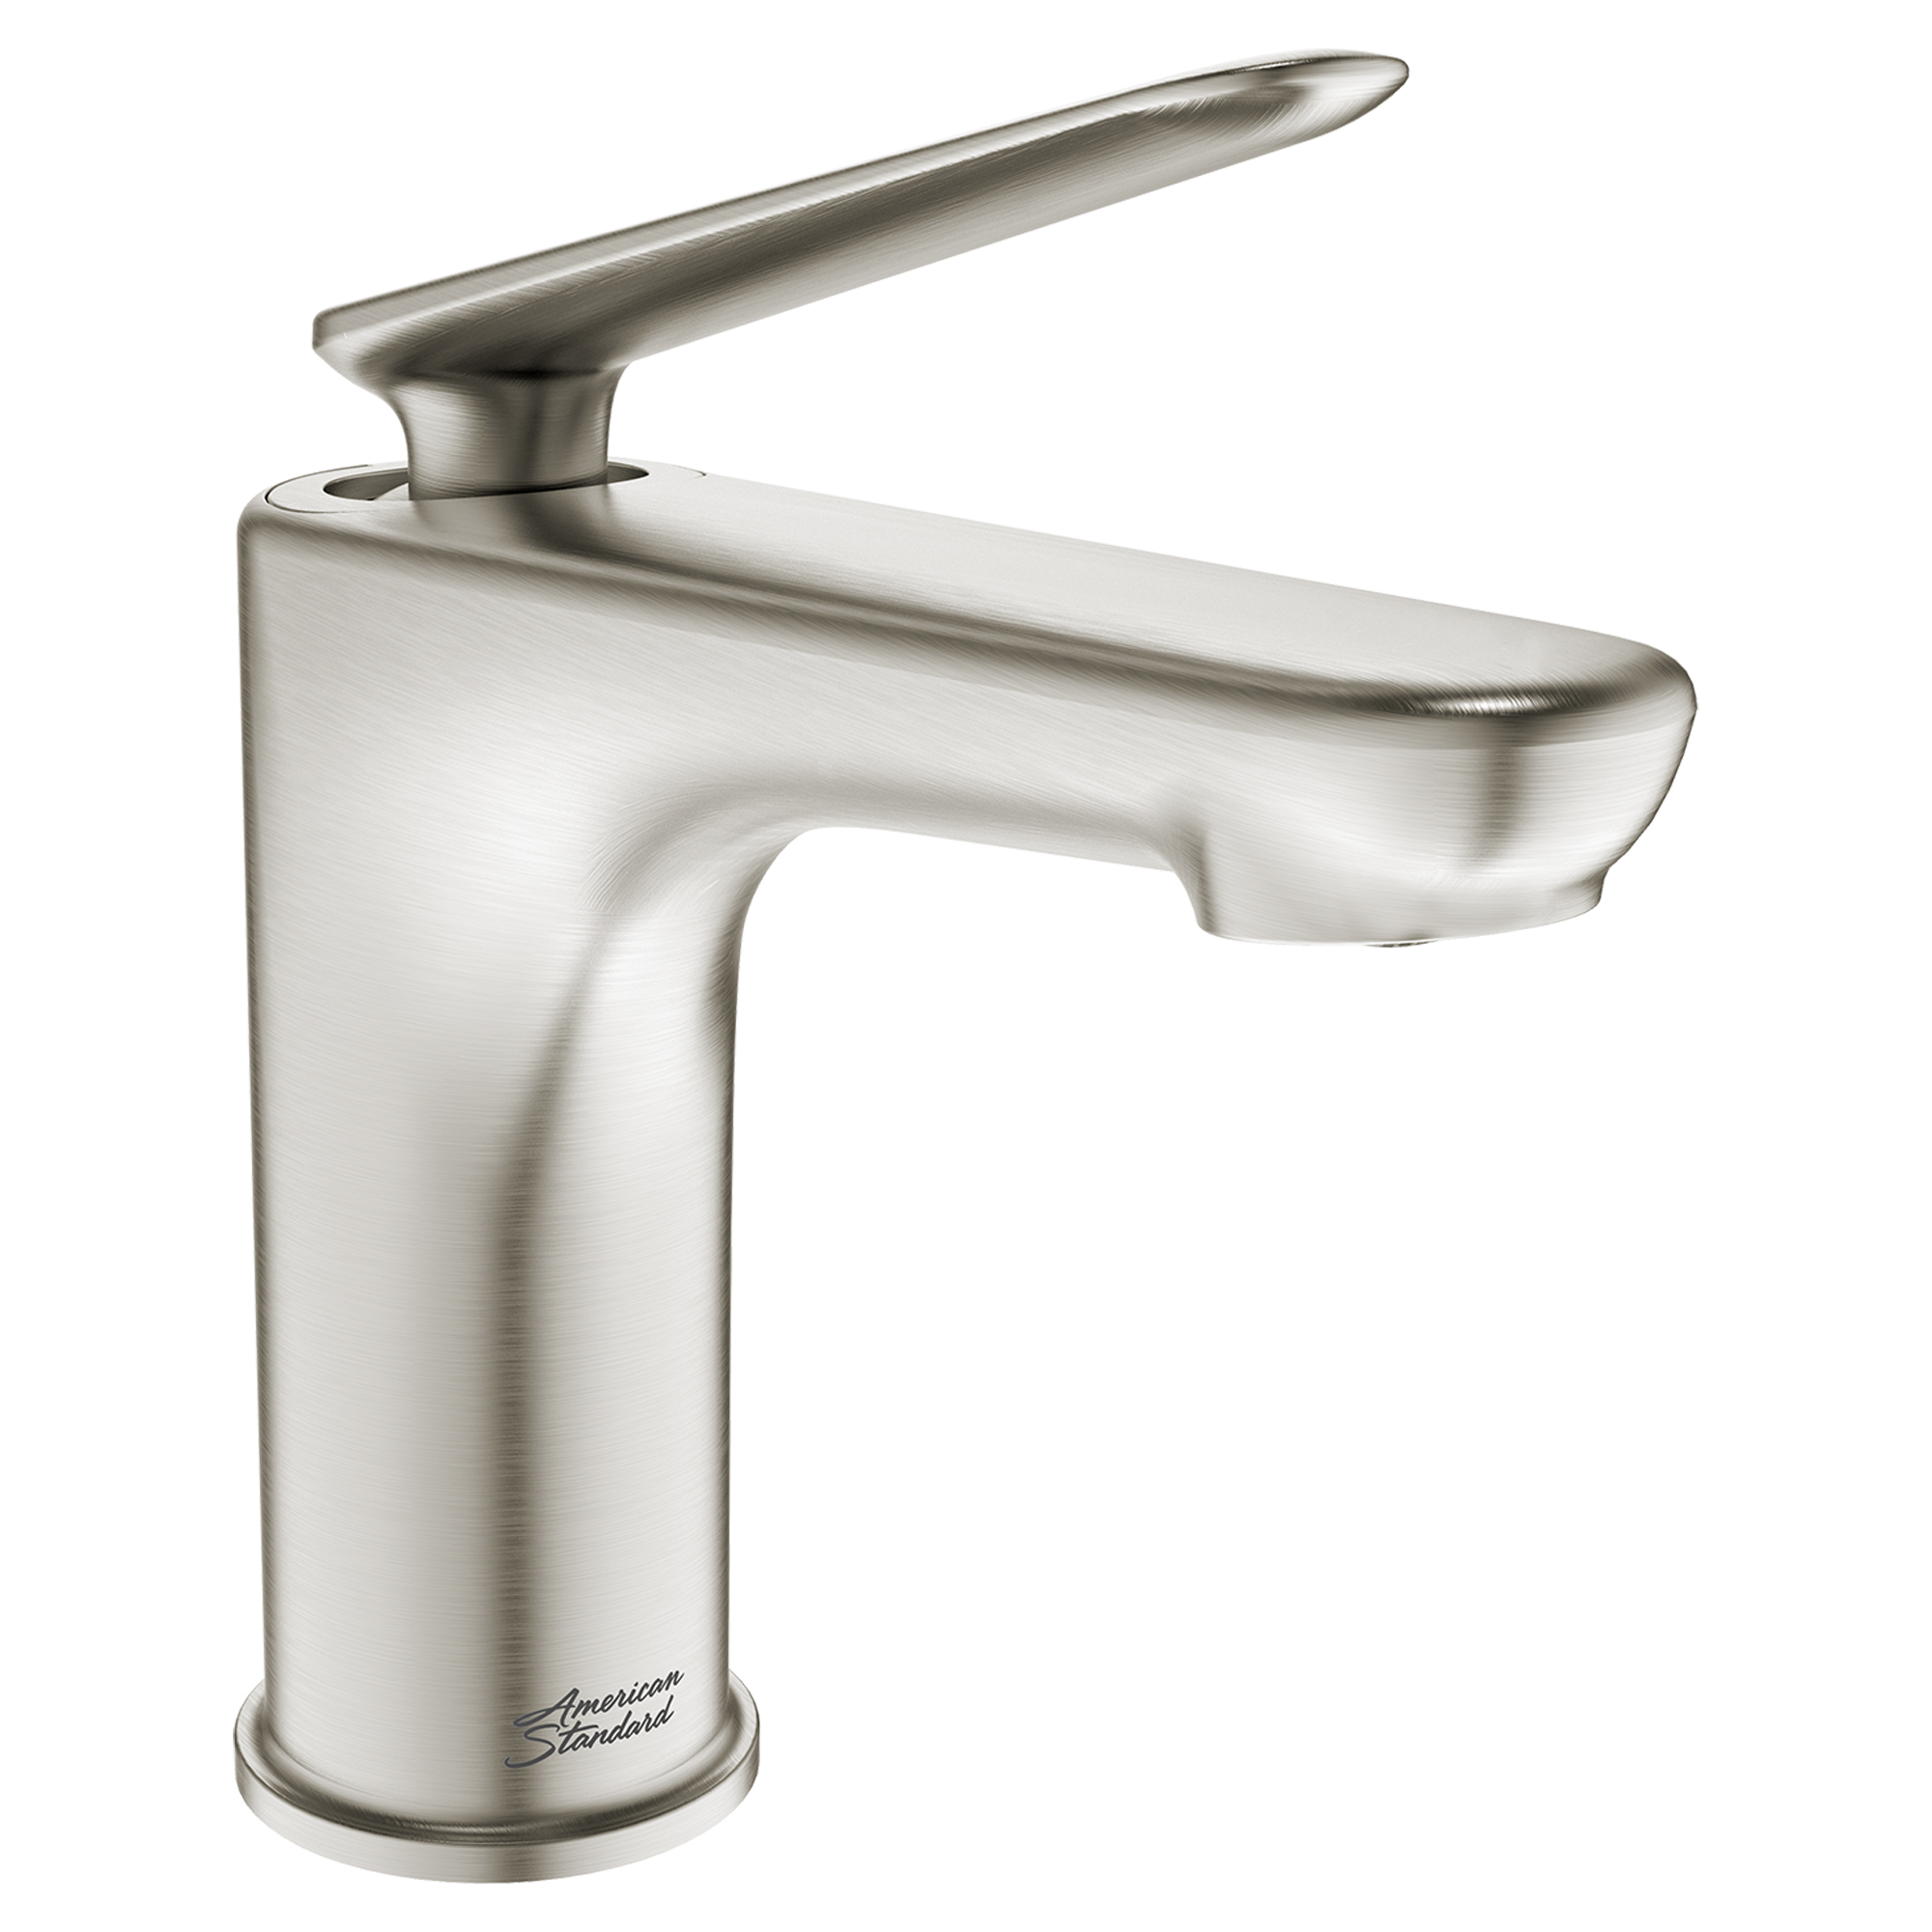 Studio® S Single Hole Single-Handle Bathroom Faucet 1.2 gpm/ 4.5 L/min With Lever Handle